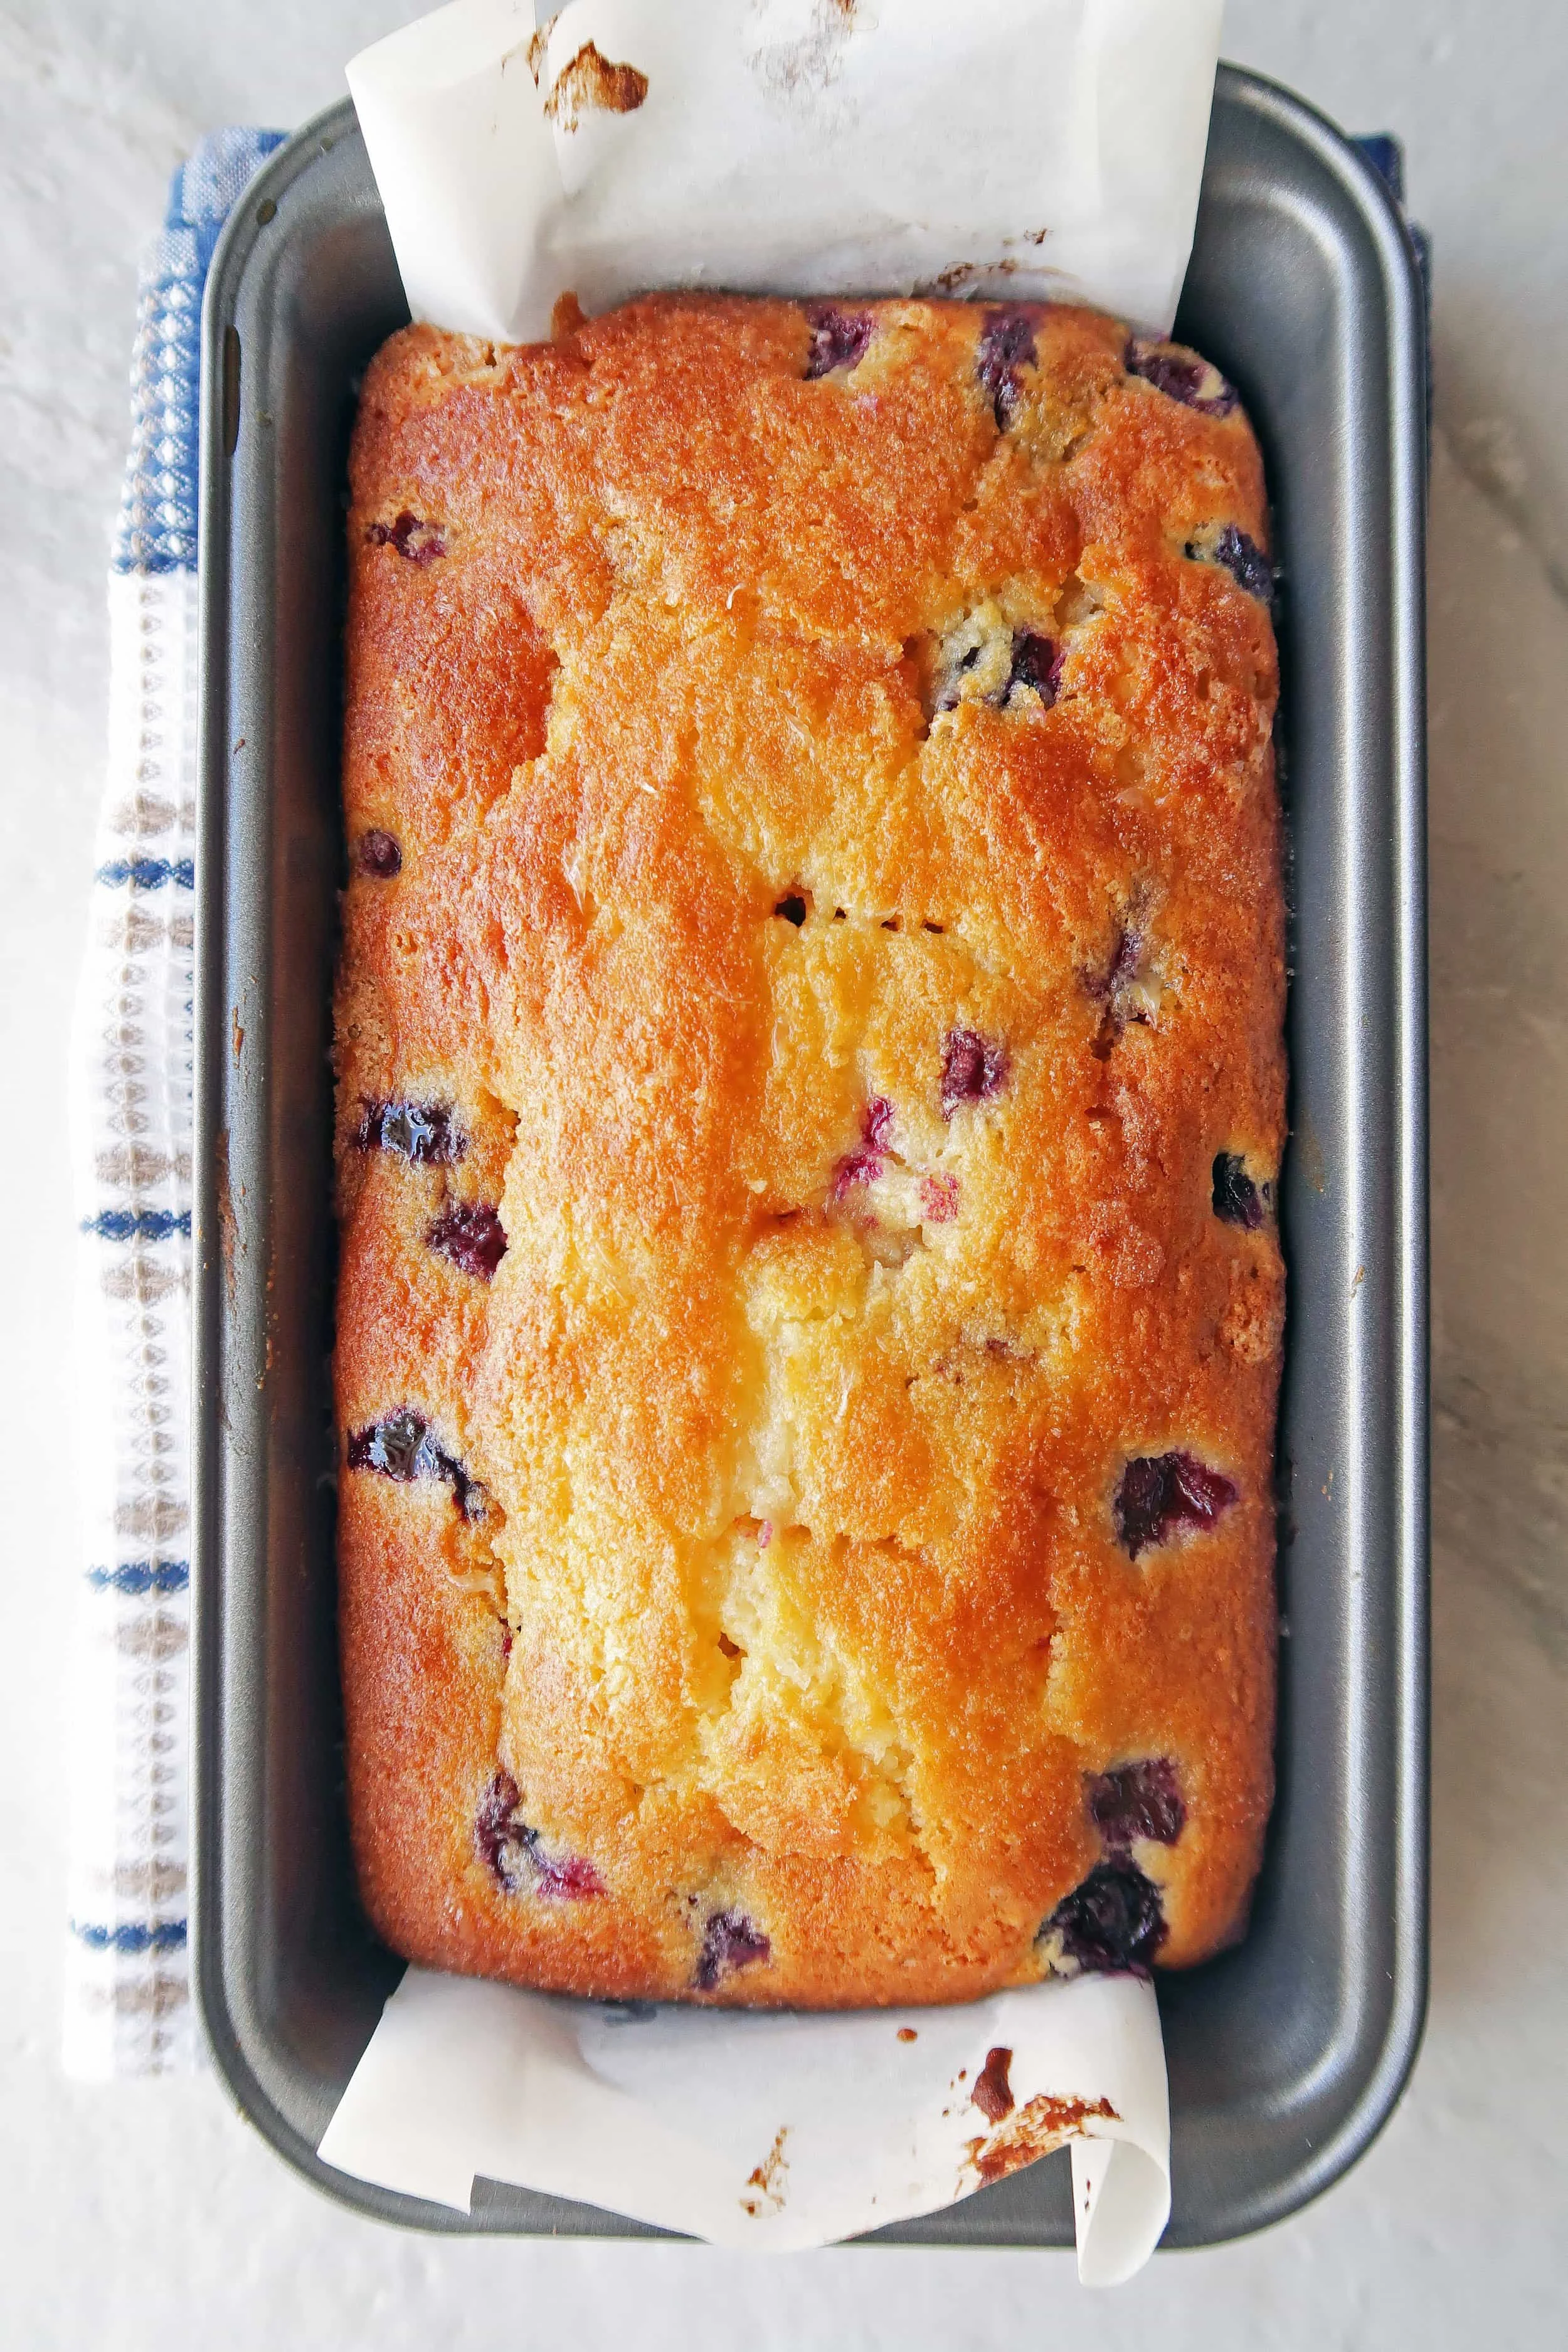 Golden brown Classic Lemon Blueberry Loaf Cake in a loaf baking pan.